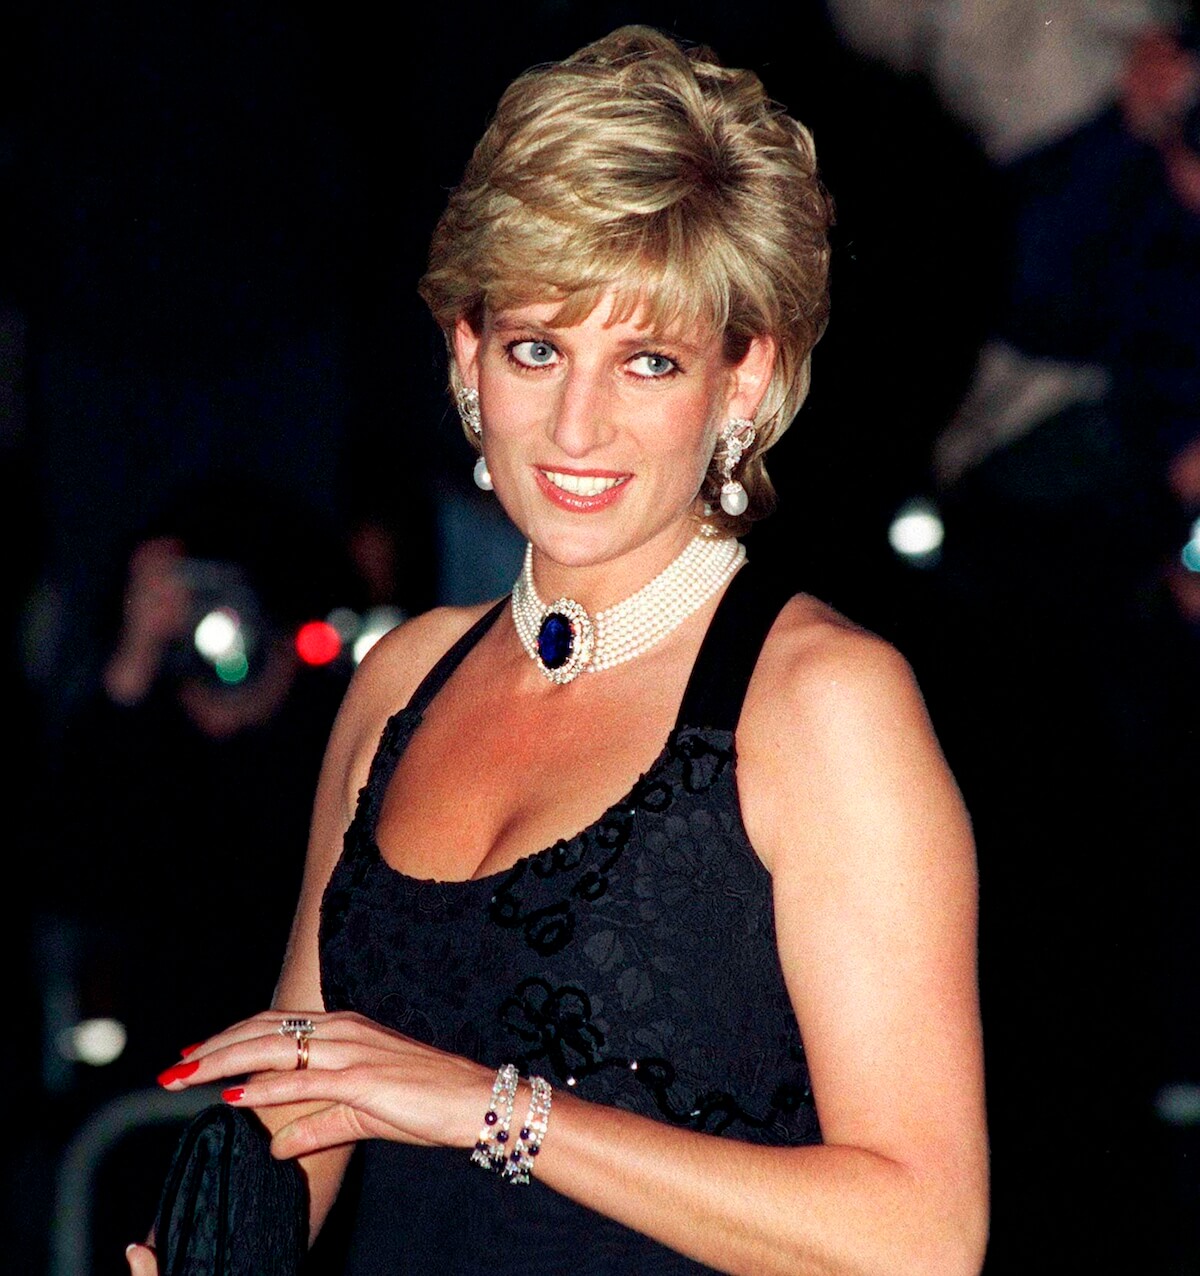 Princess Diana was a fashion icon